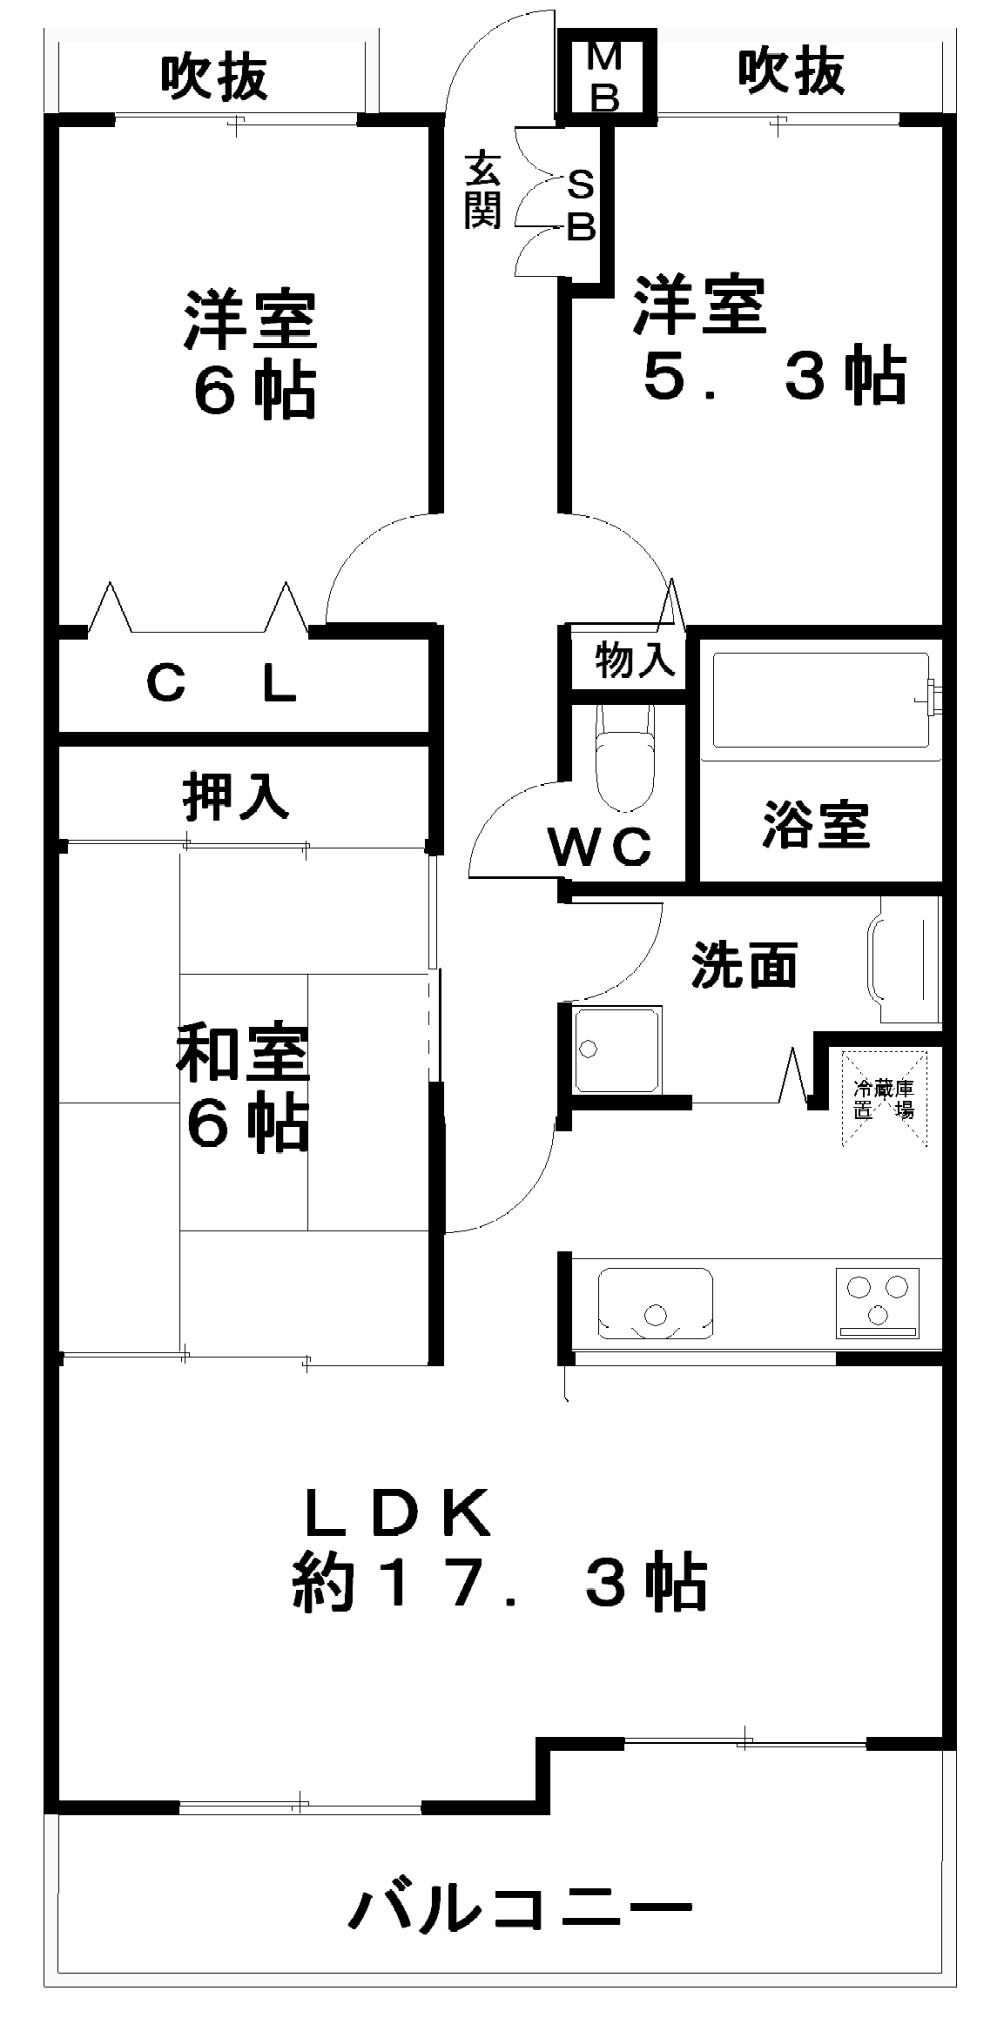 Floor plan. 3LDK, Price 9.8 million yen, Occupied area 74.63 sq m , Balcony area 7.76 sq m